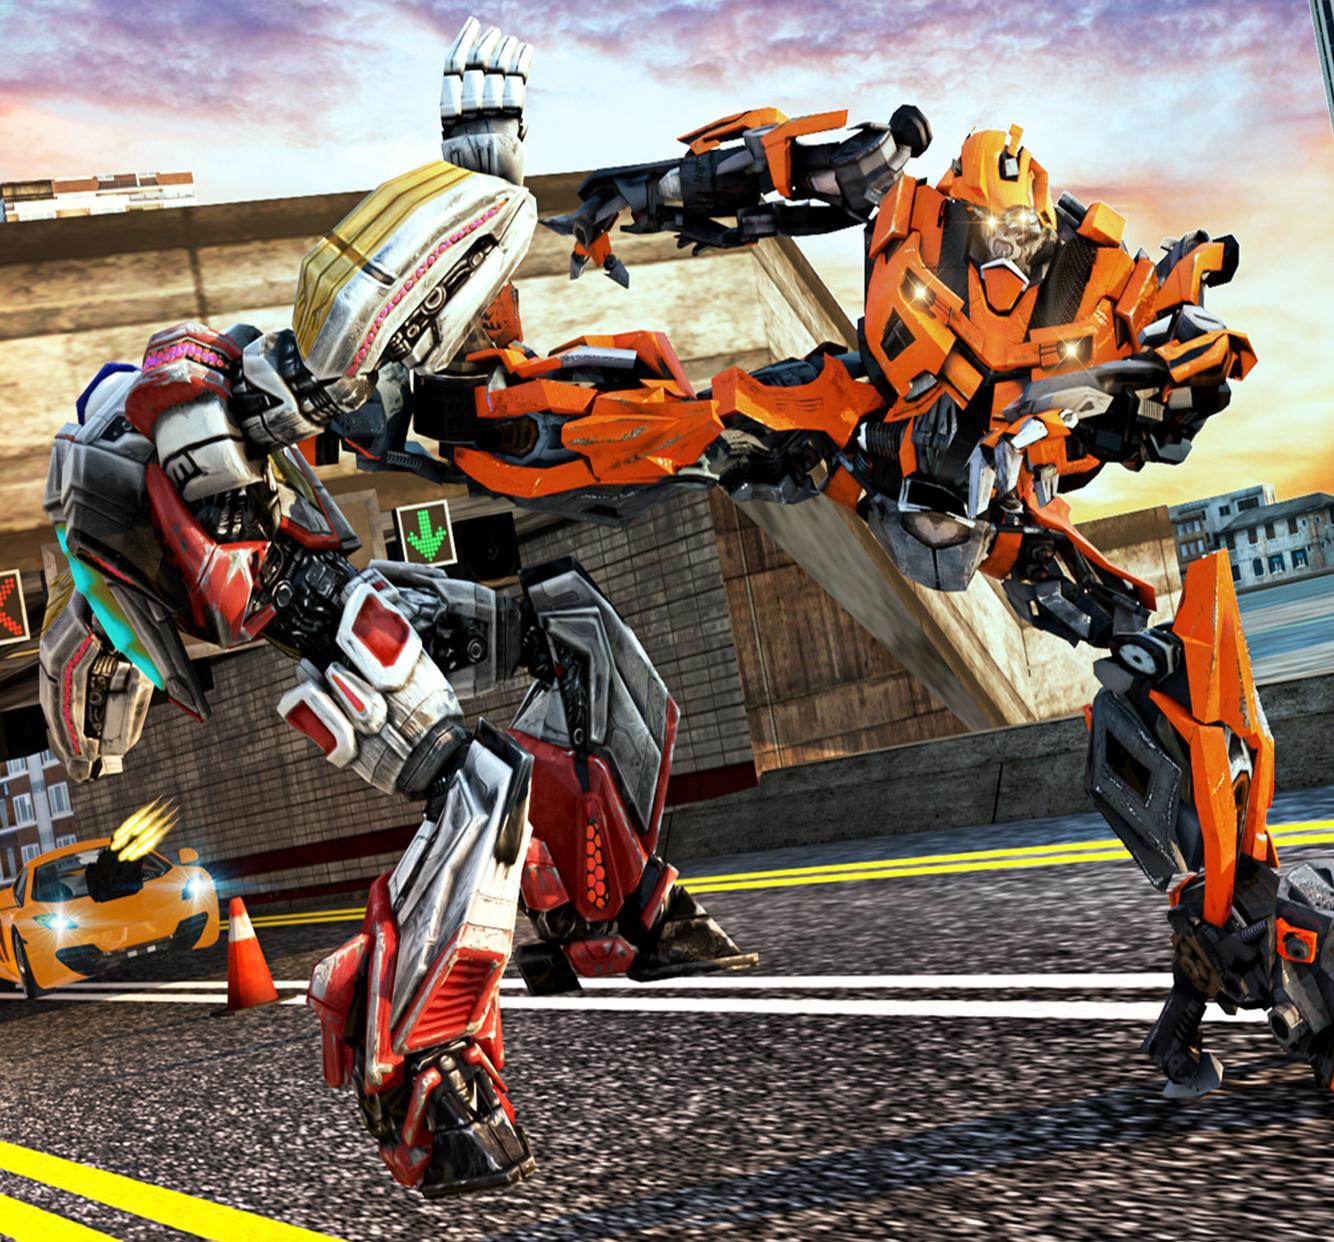 Transformers v. Трансформеры против роботов. Робот против робота. Робот киллер трансформер. Экшен про роботов.